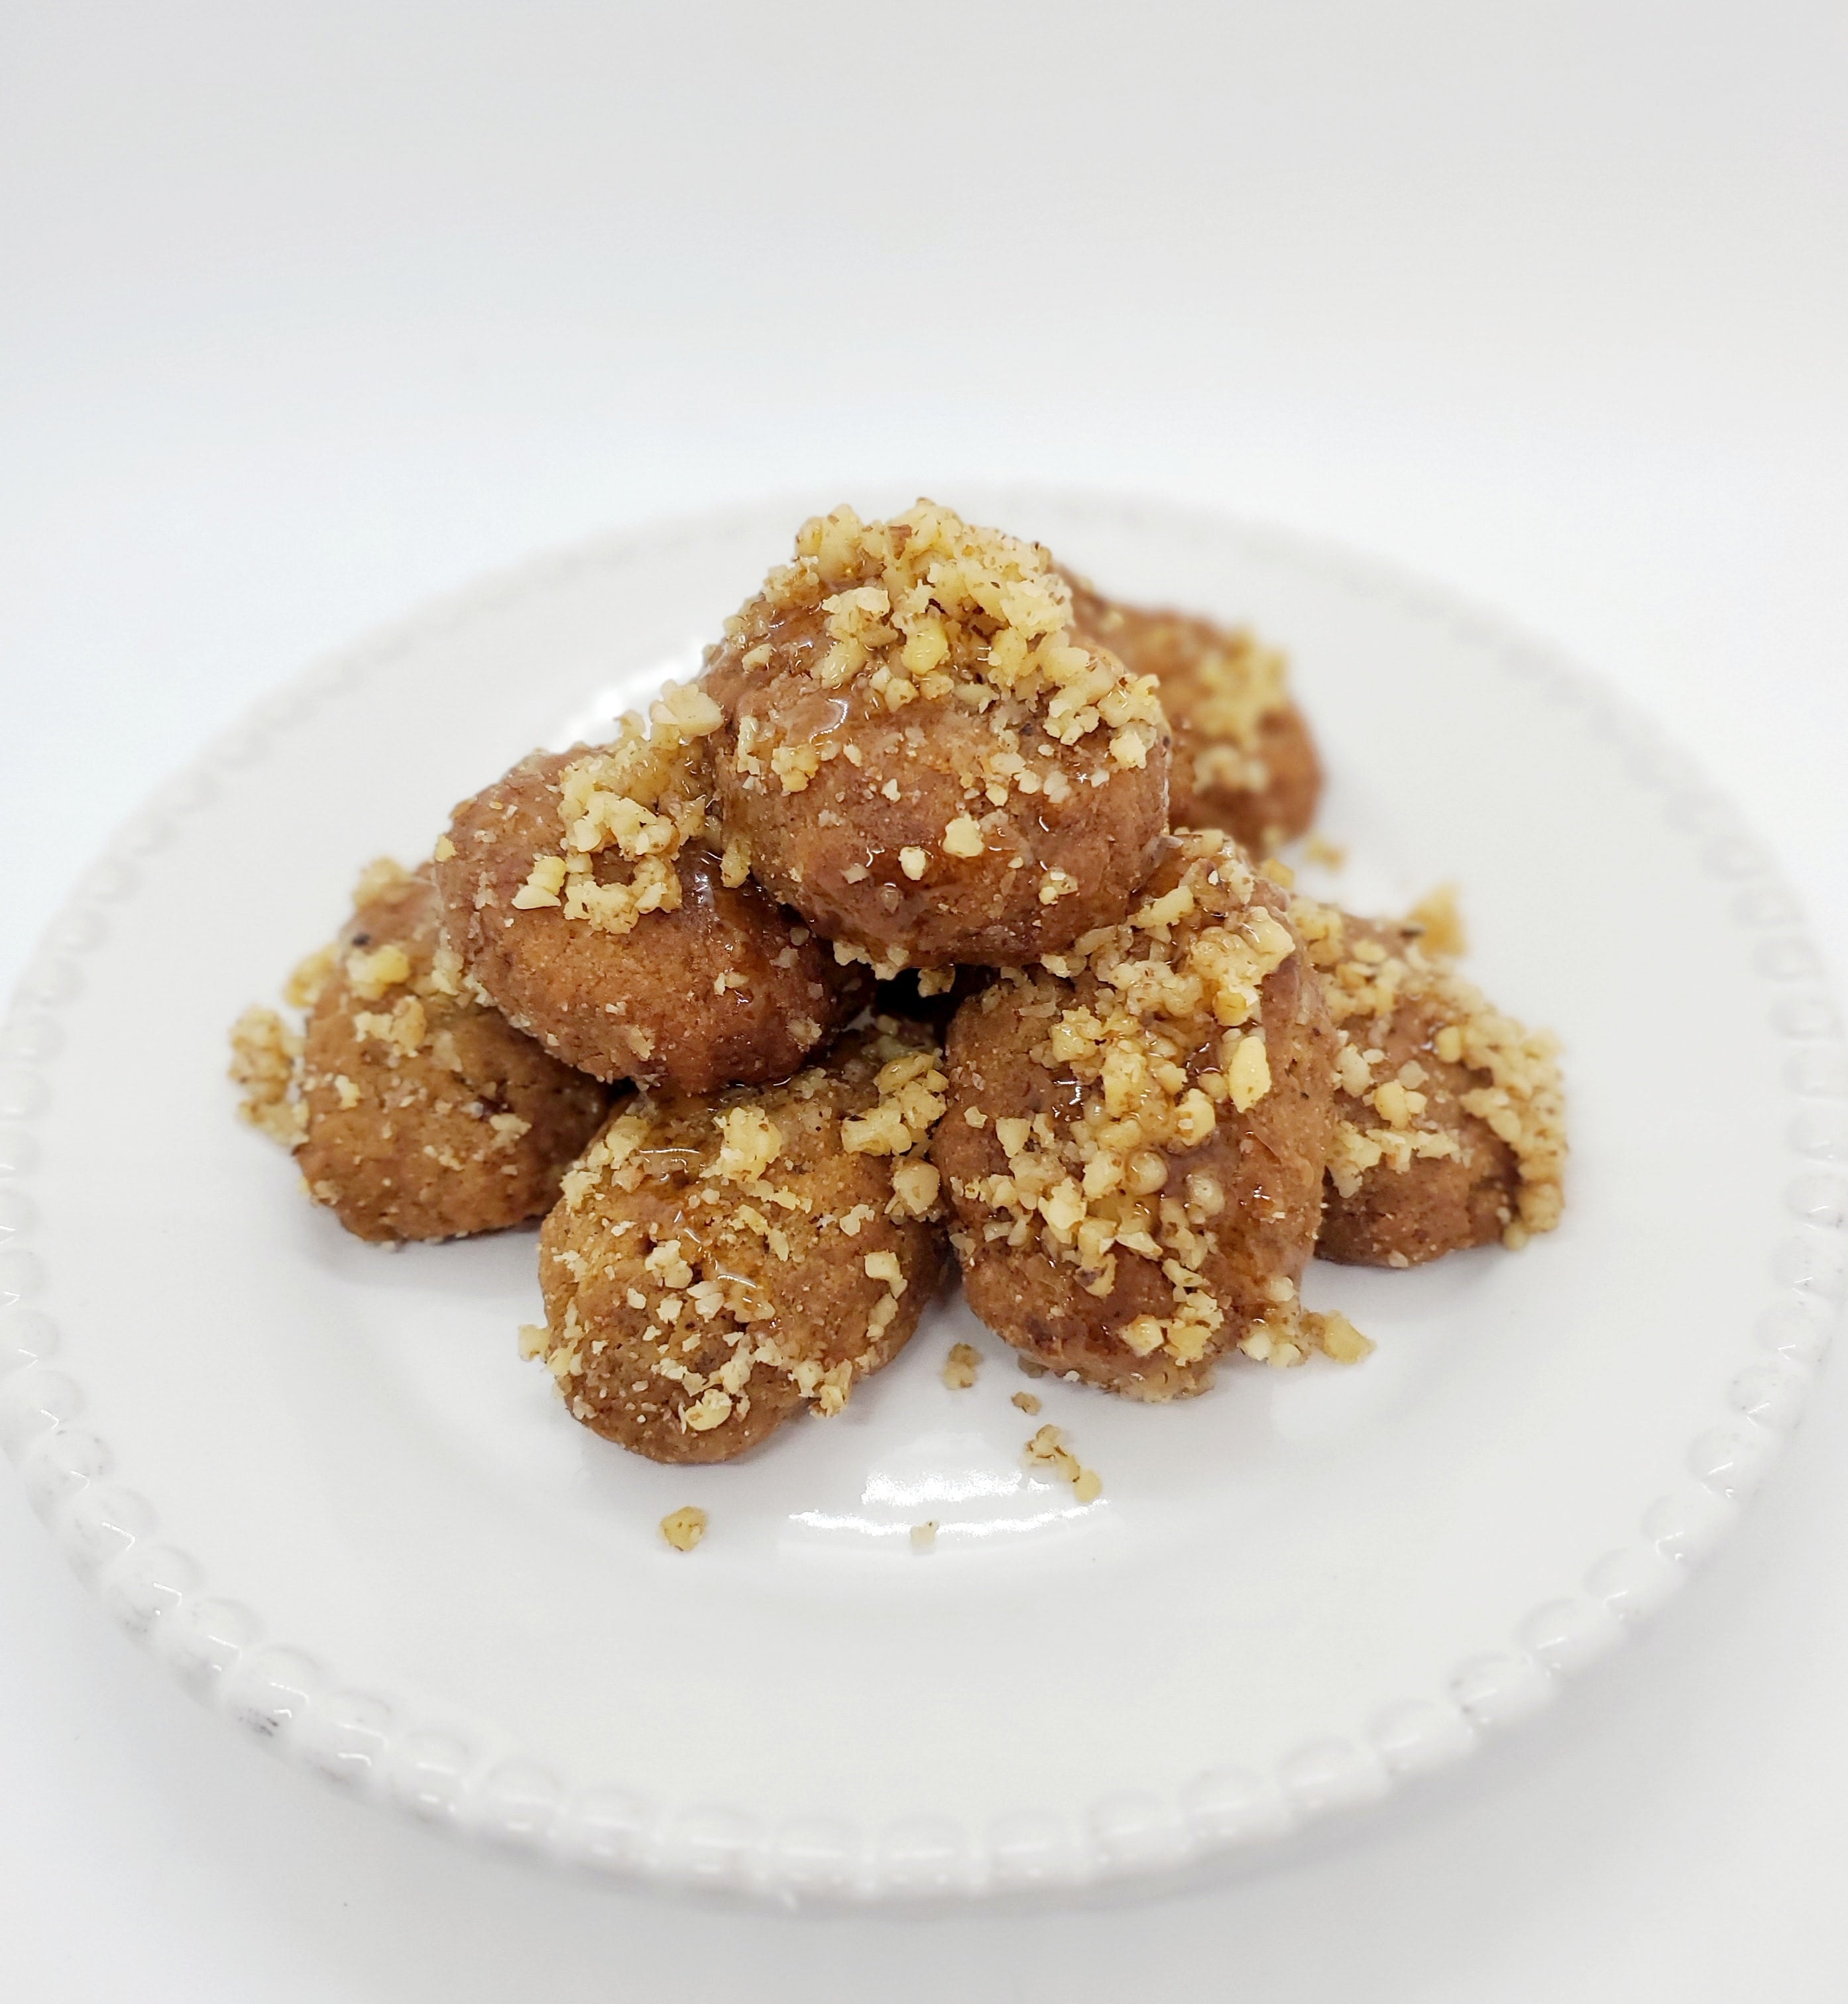 Anthos Melomakarona - Traditional Honey & Walnut Cookies